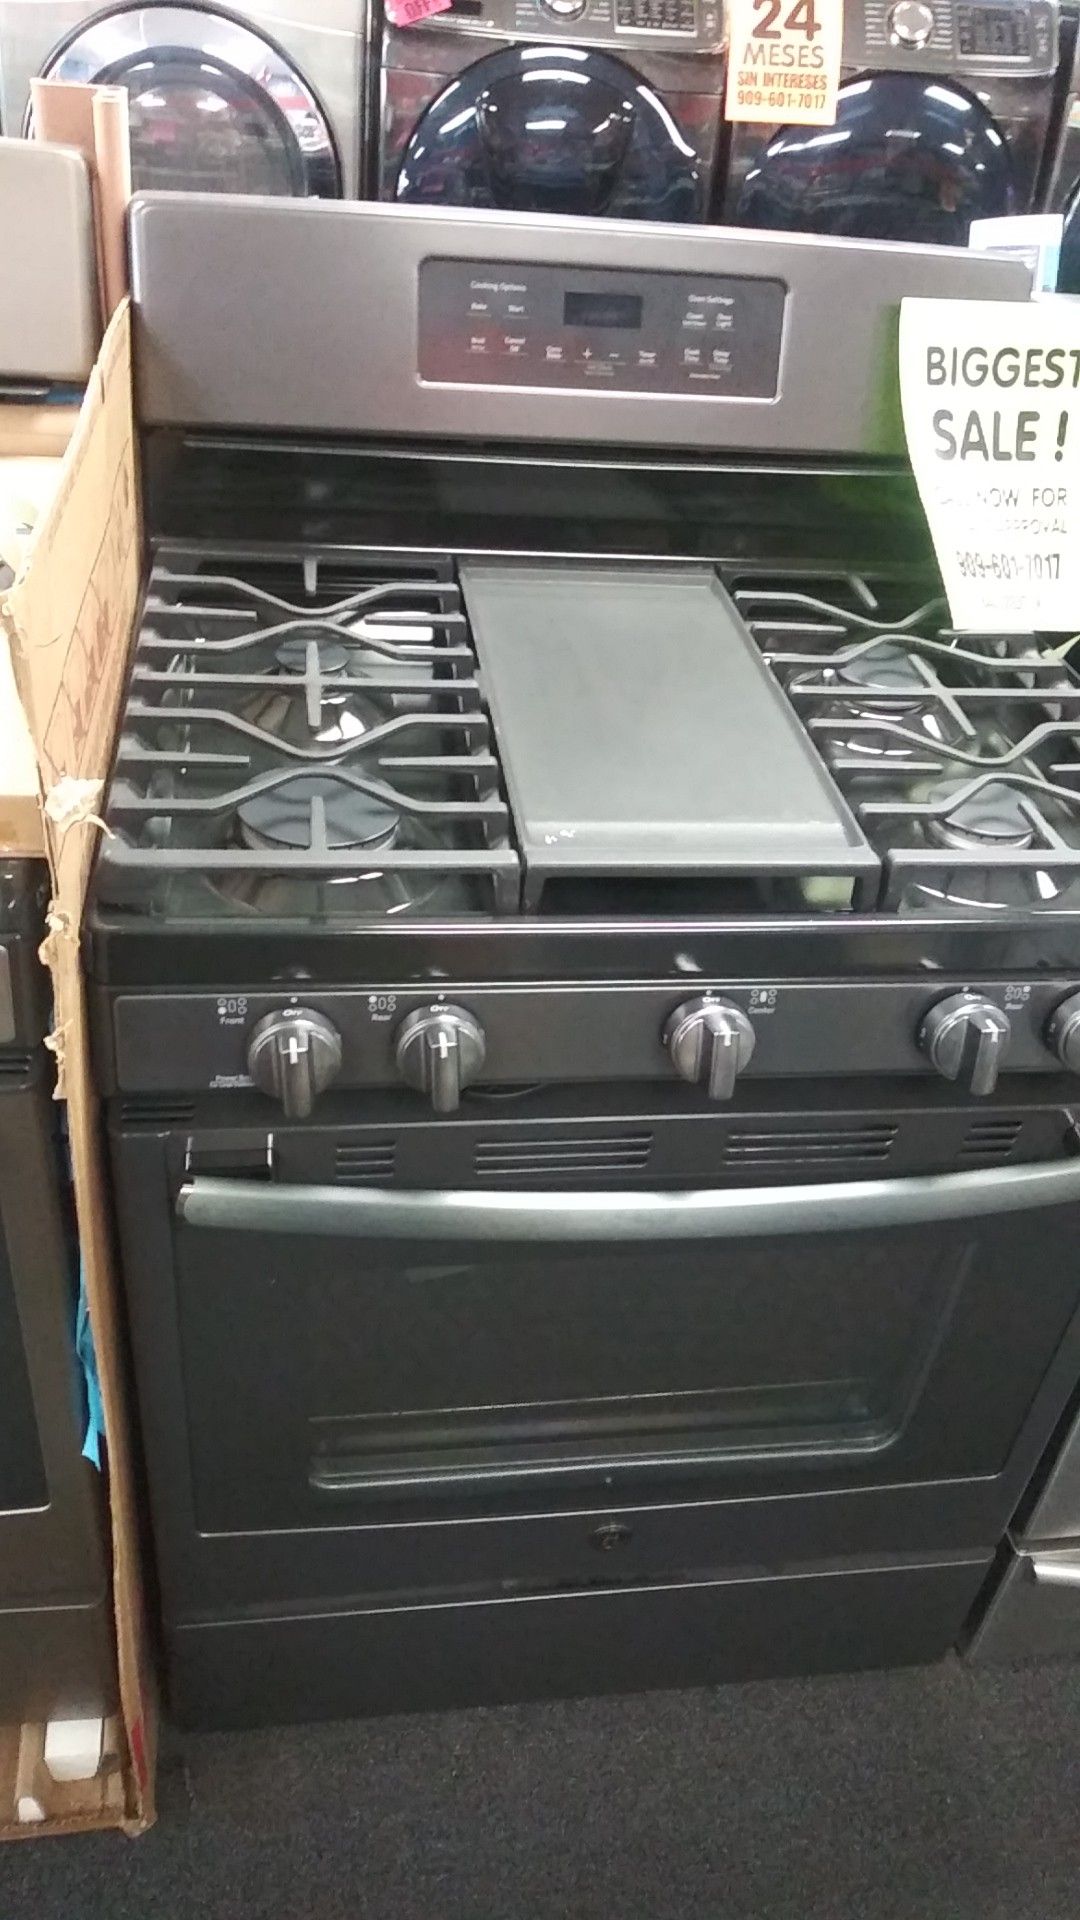 GE black stainless steel stove